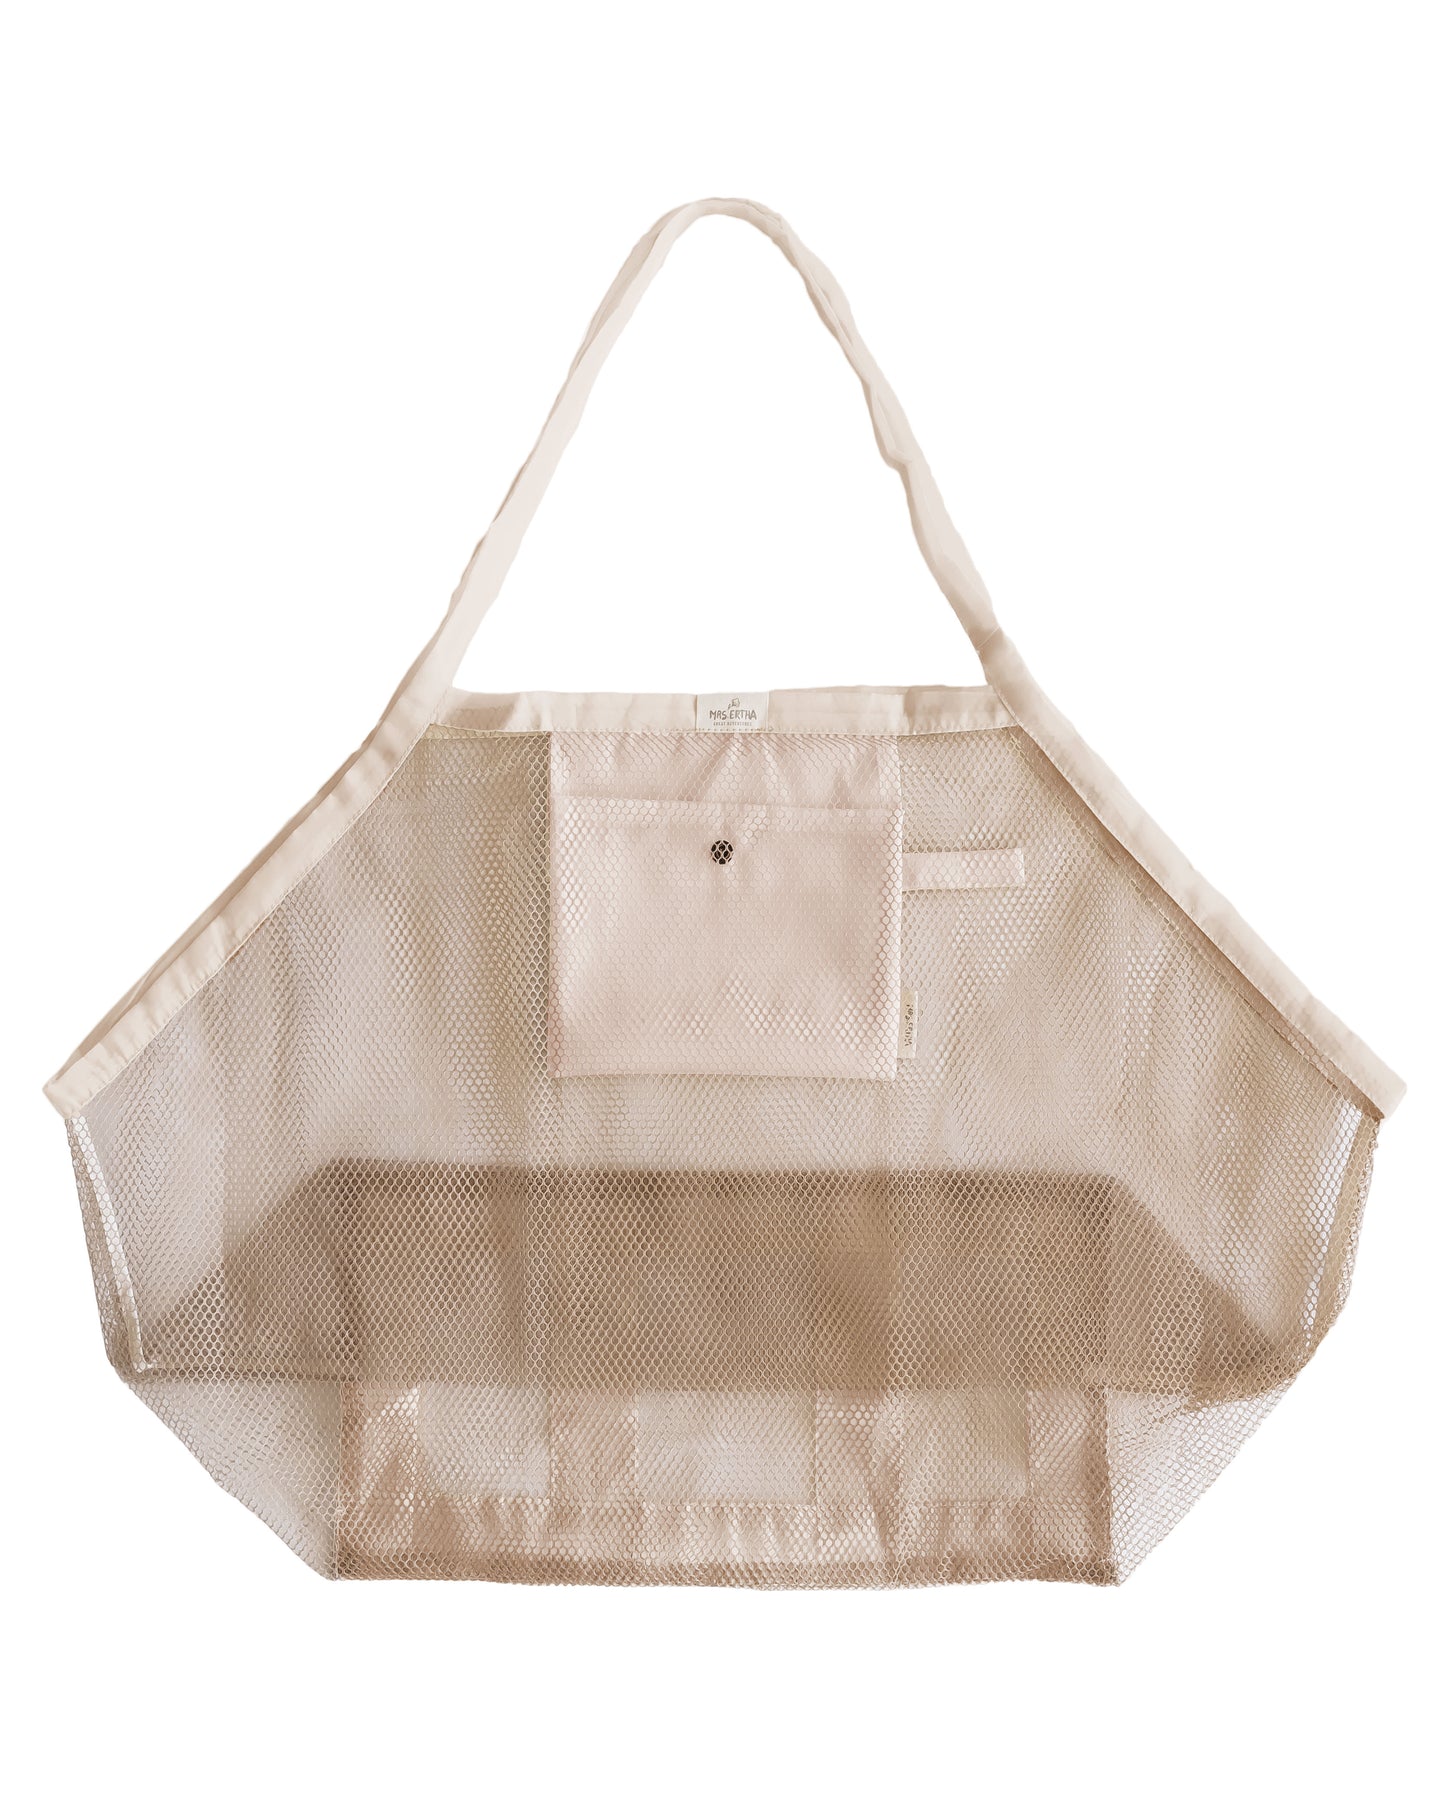 Meshies XL Beach Bags - Ivory